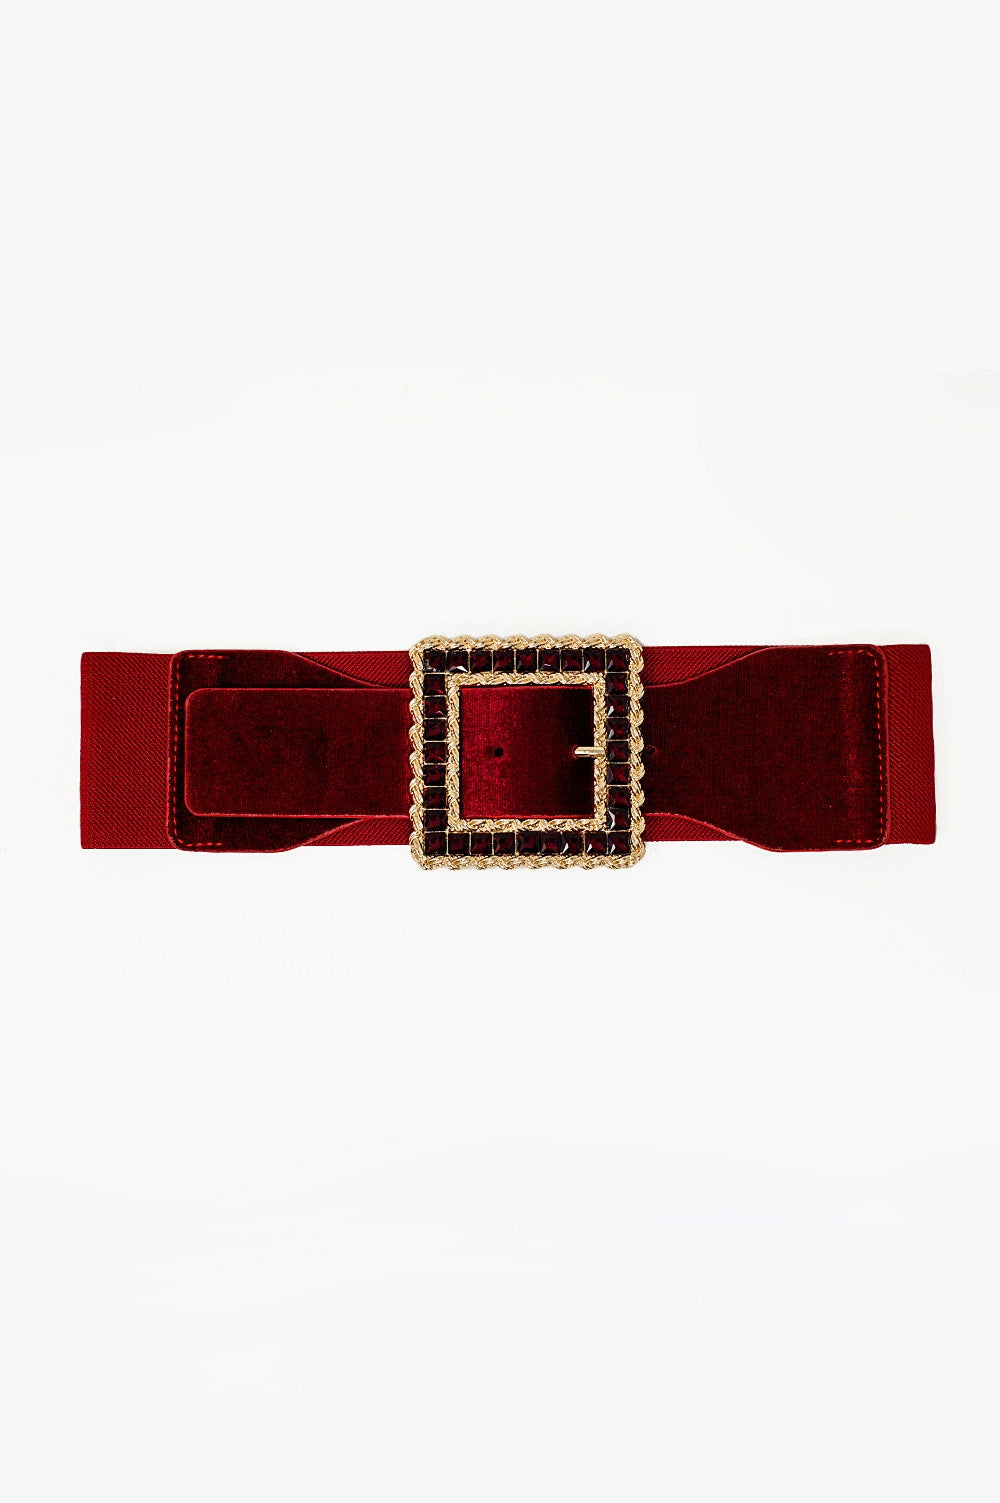 Q2 Square red belt with rhinestones and adjustable elastic